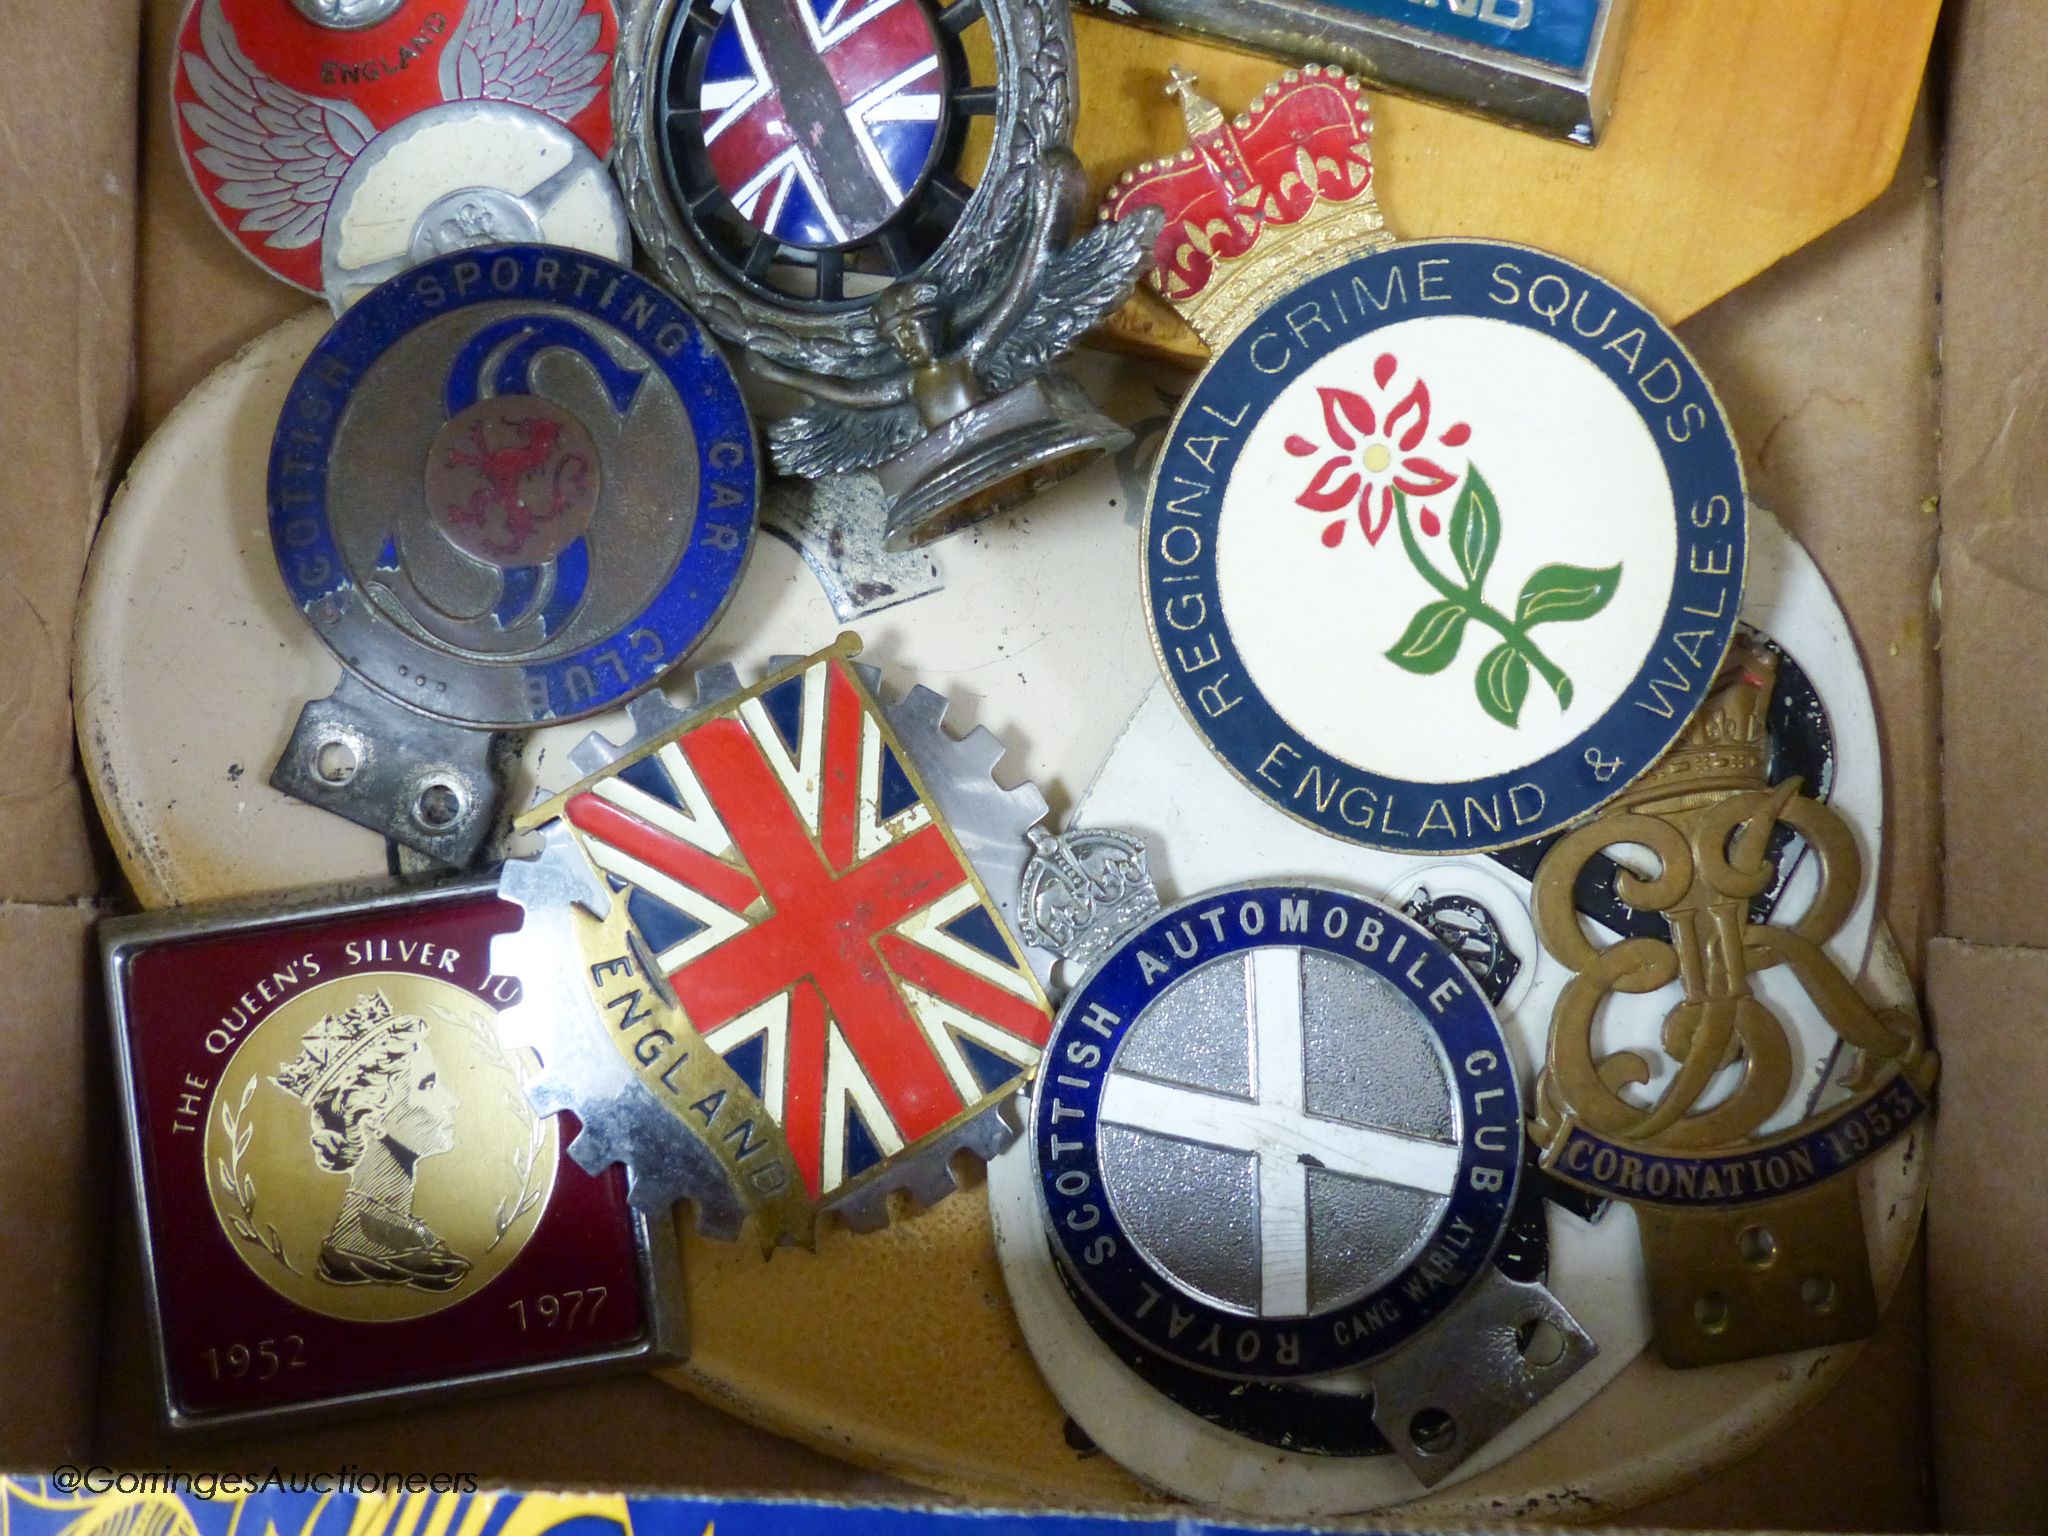 A quantity of various British Car badges